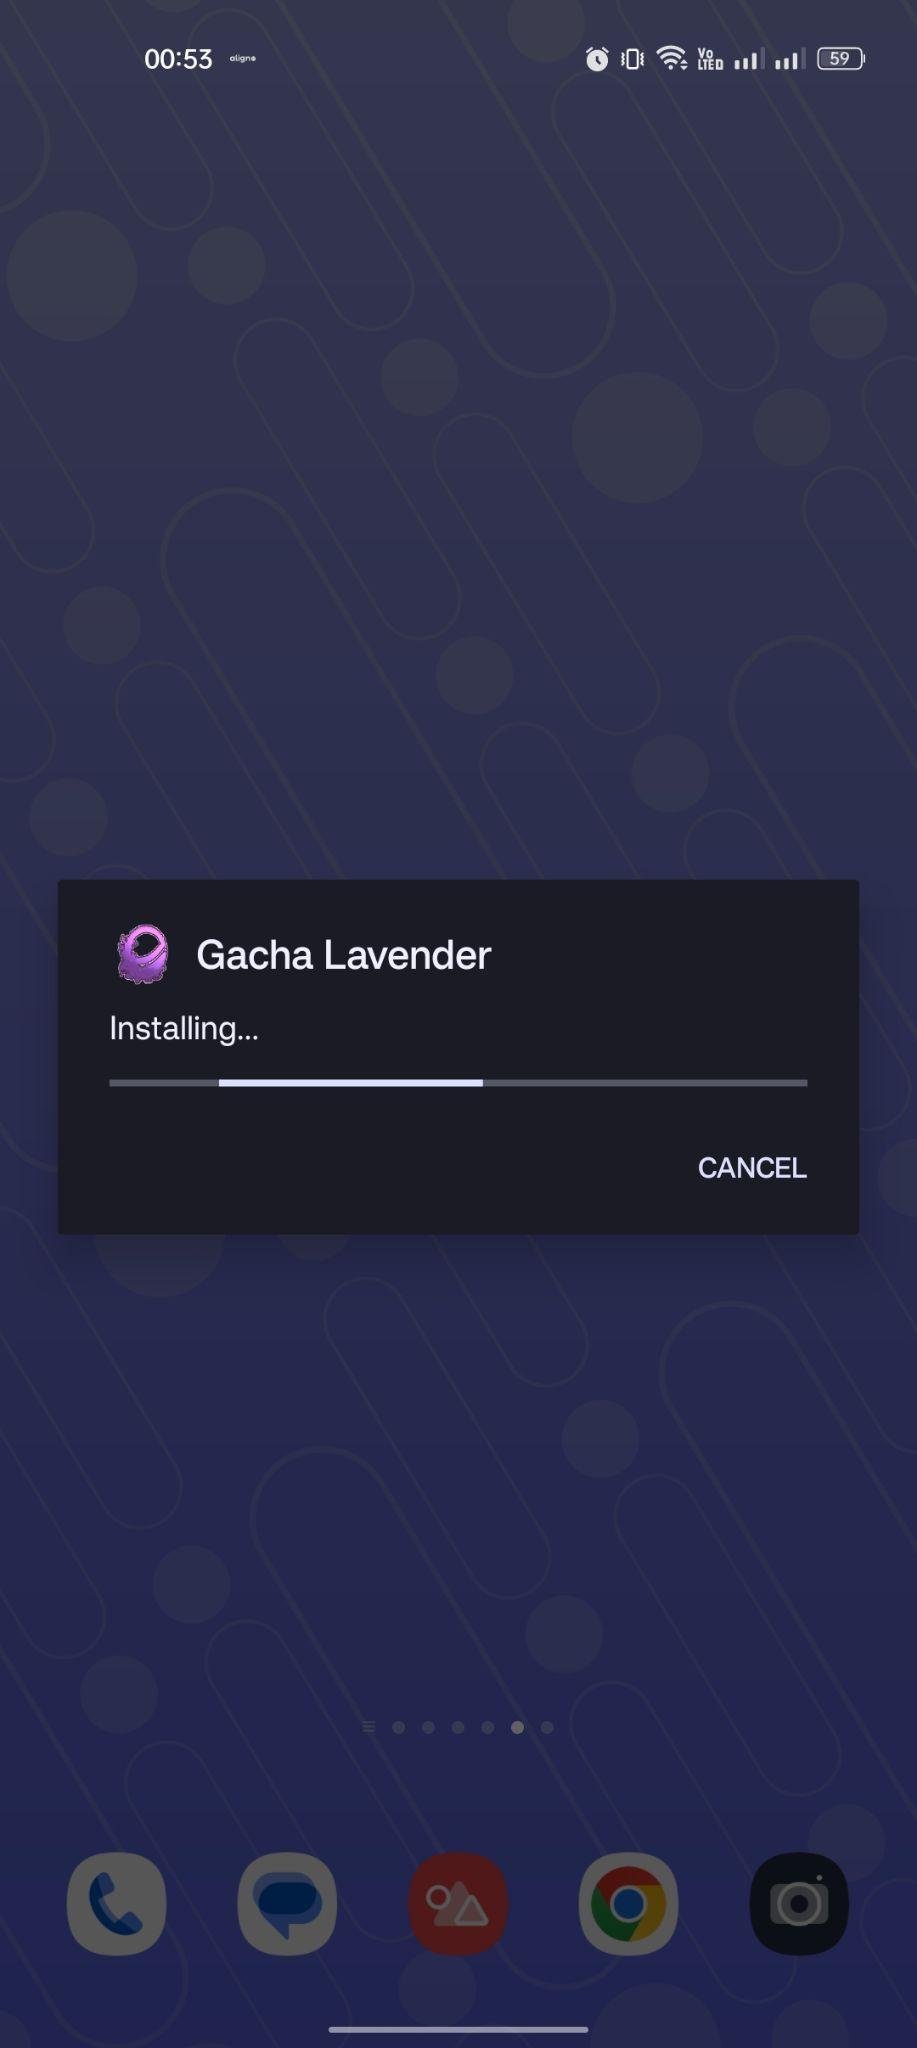 Gacha Lavender apk installing